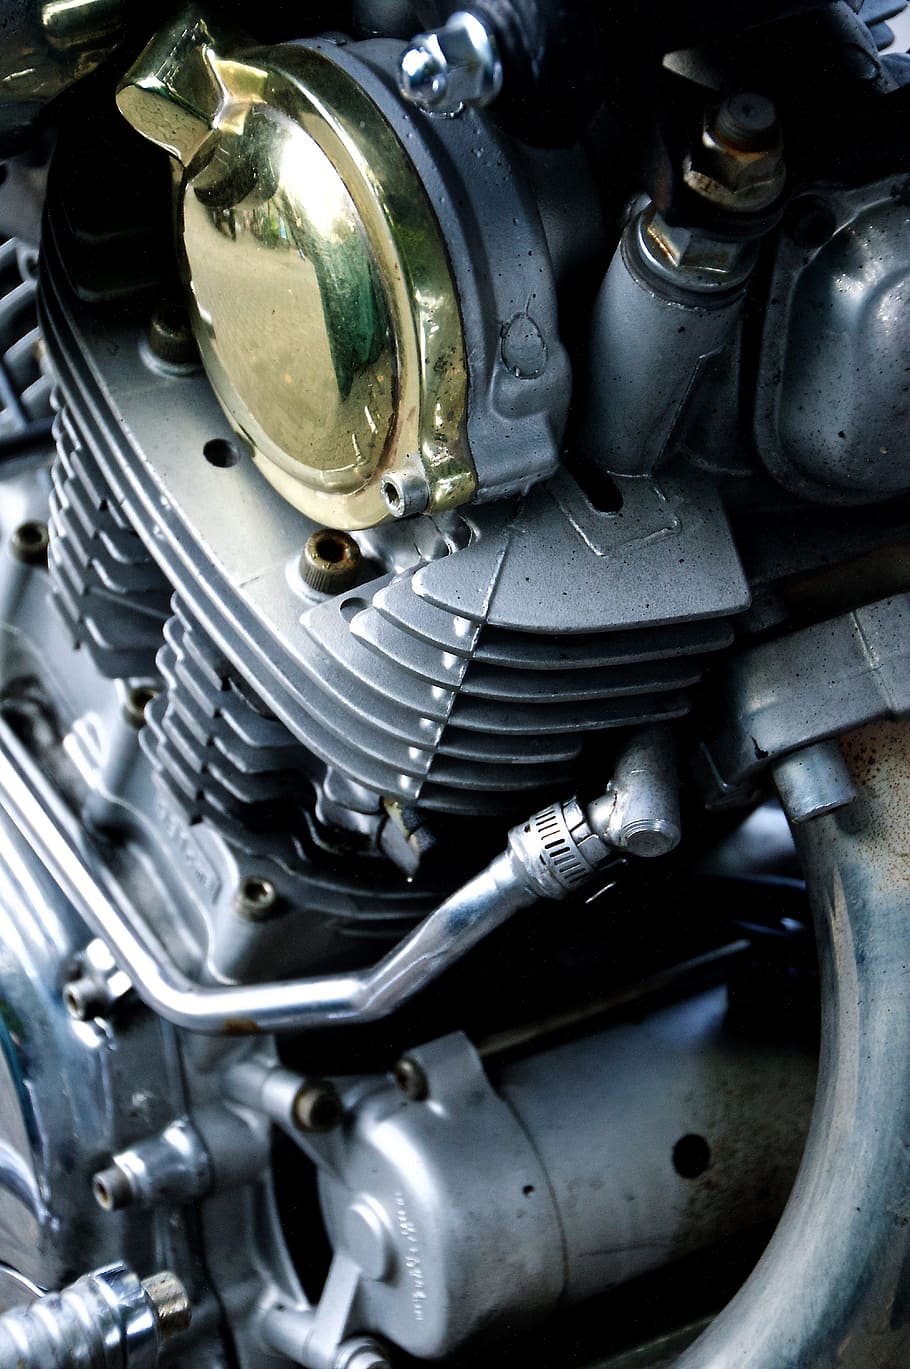 gray motorcycle engine, yamaha, motorcycle, details, technology, chrome, metallic, metal, bikes, oldtimer